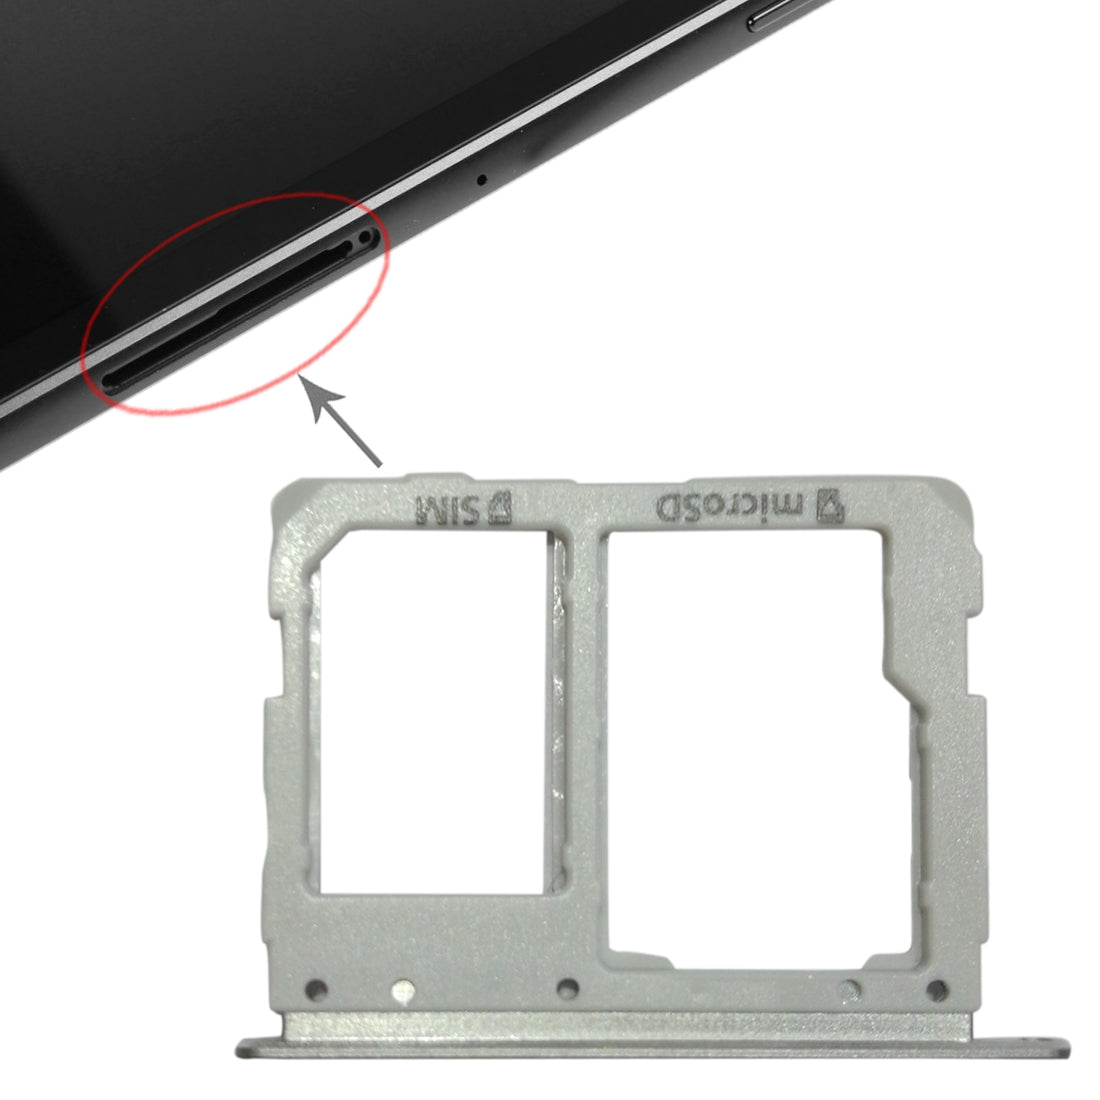 SIM / Micro SD Tray for Samsung Galaxy Tab S3 9.7 / T825 3G Silver